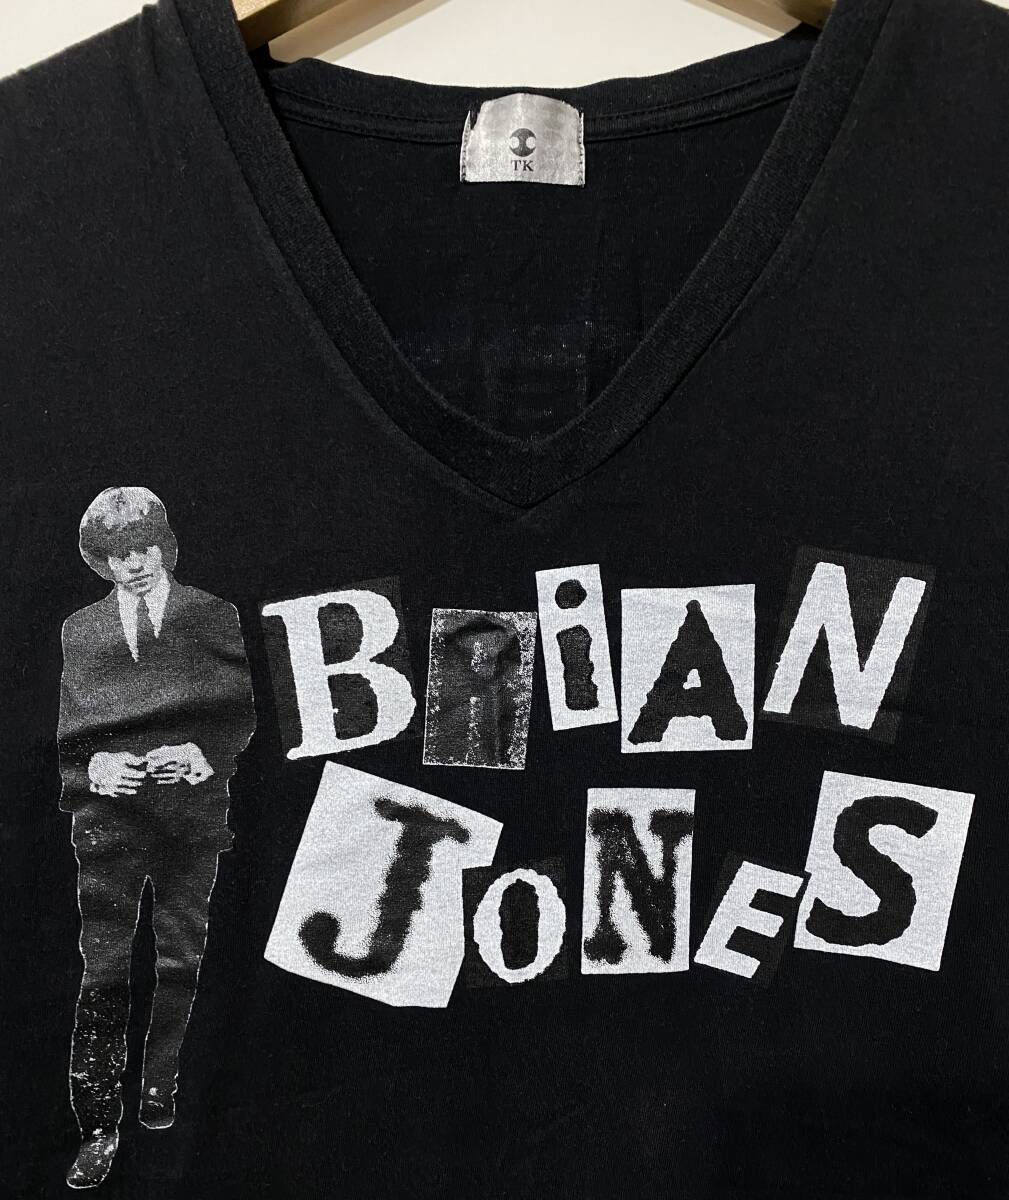 * TK short sleeves V neck T-shirt black black Brian Jones low ring Stone z collaboration BRiAN JONES THE ROLLING STONES